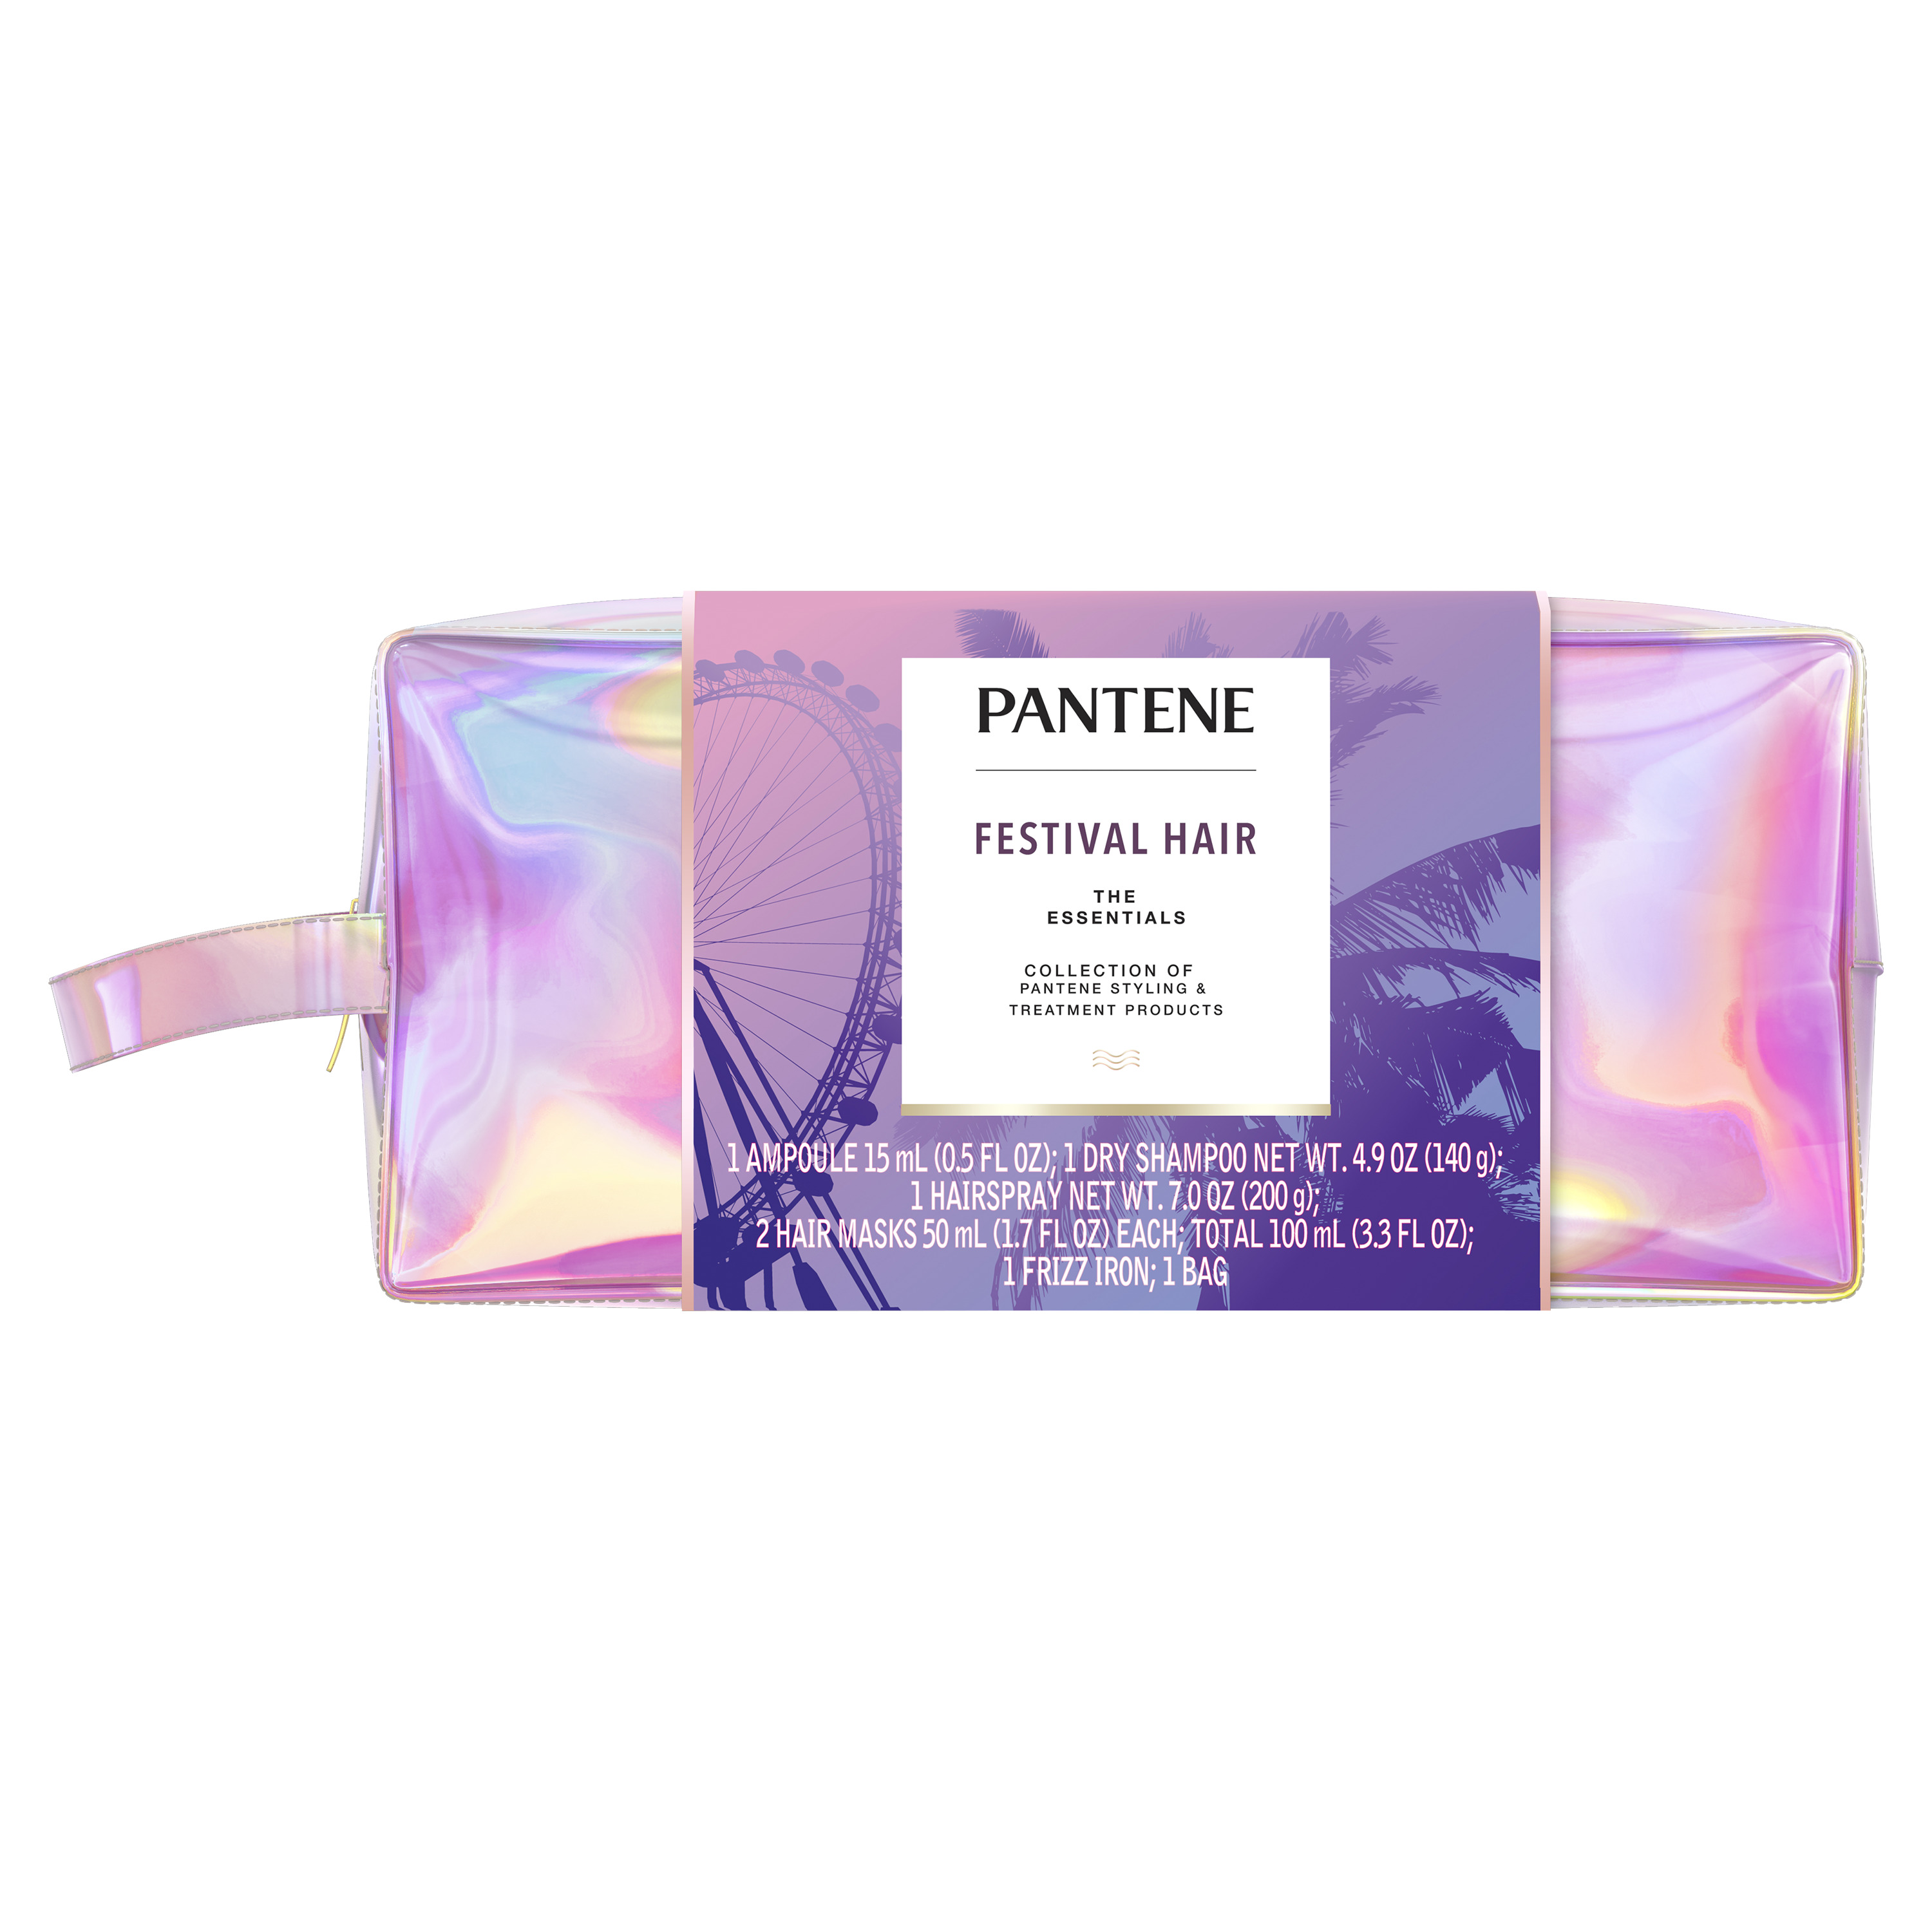 Pantene Festival Hair Kit – Dry Shampoo, Hairspray, Nourishing Mask, Rescue Shot, Frizz Iron - image 1 of 8